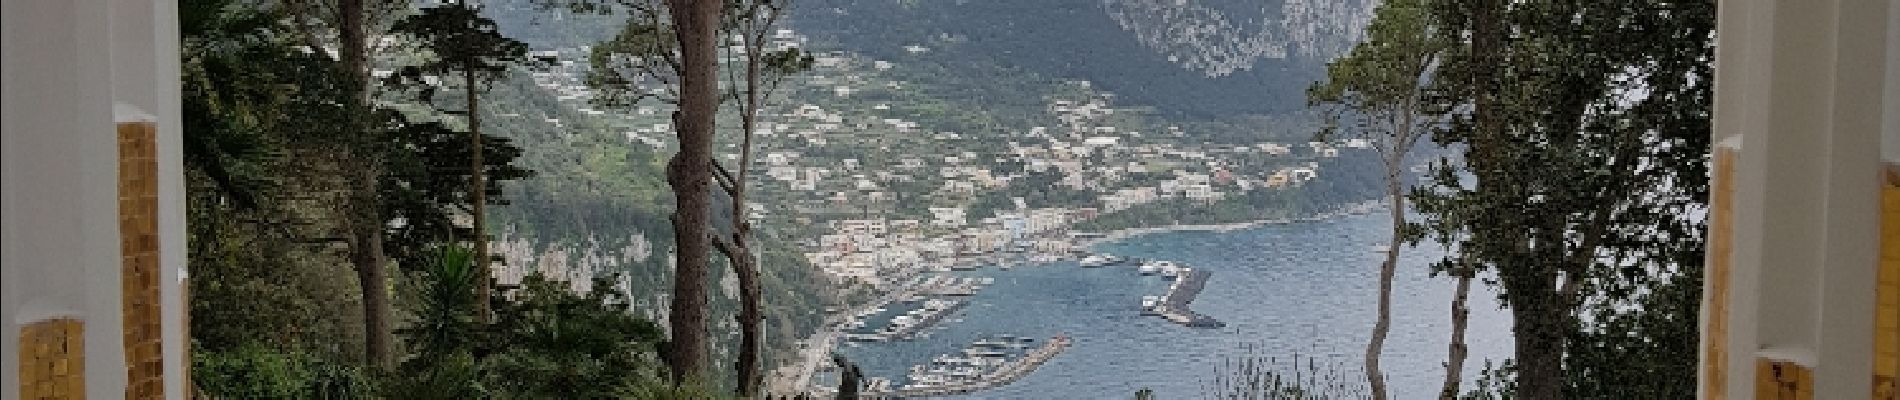 Trail Walking Capri - Capri - Villa Lysis - Photo